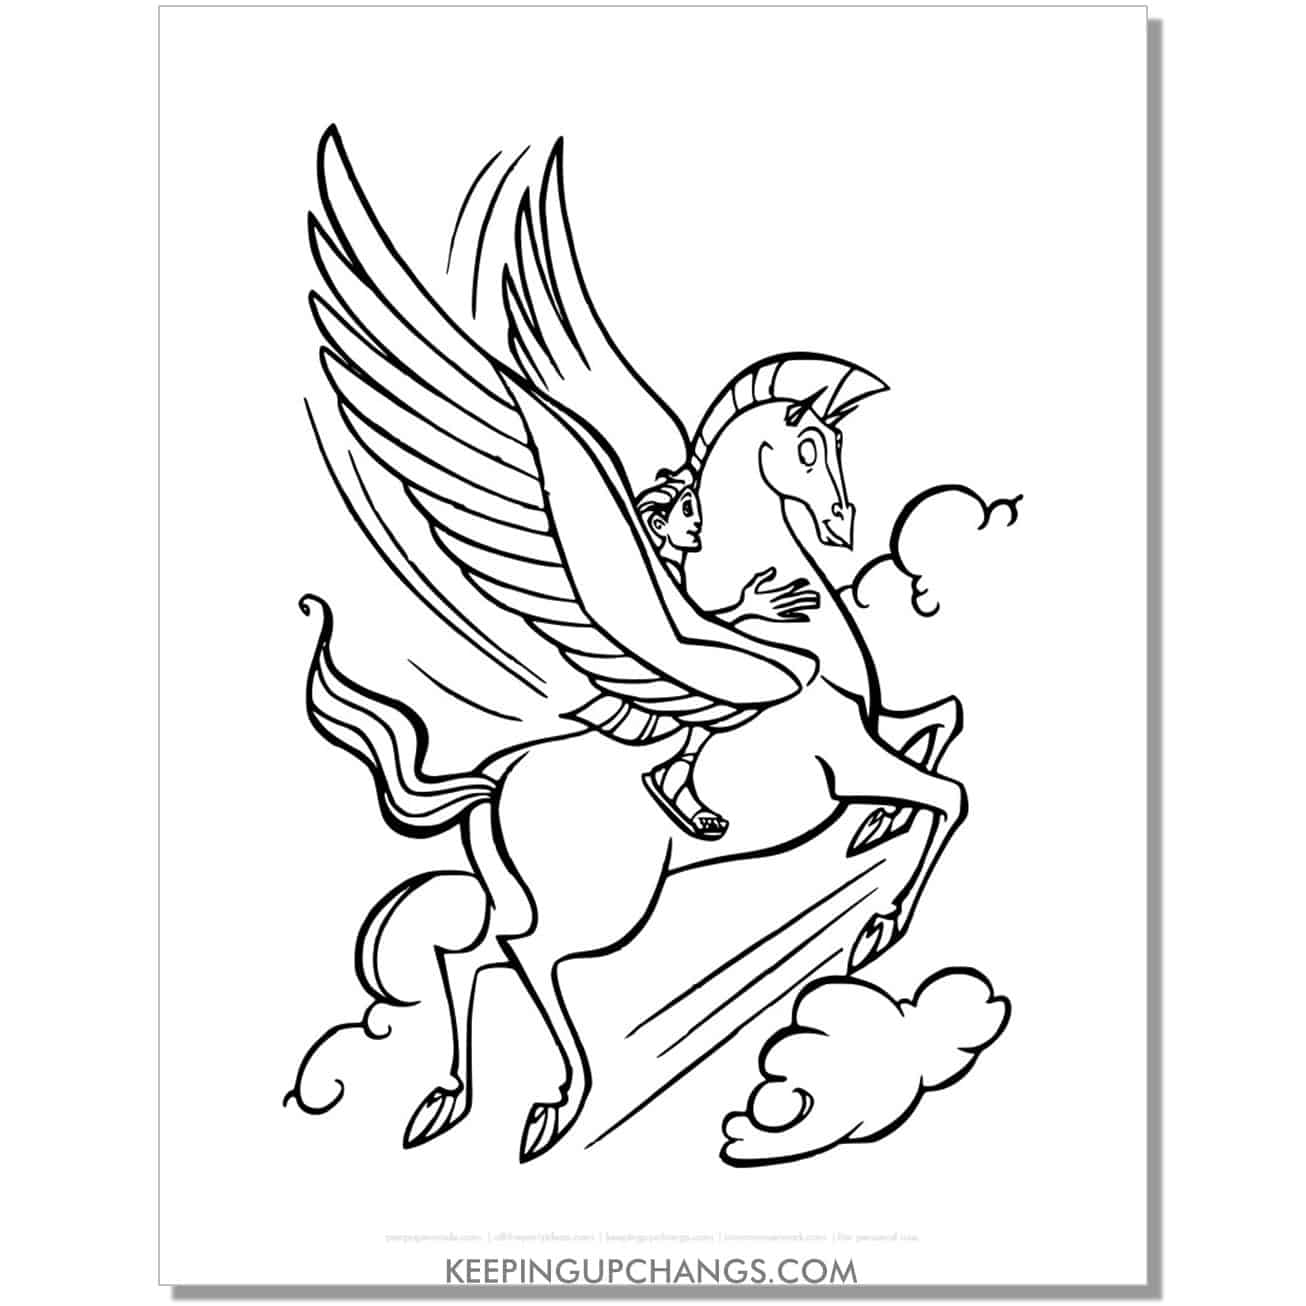 hercules, pegasus flying side view coloring page, sheet.